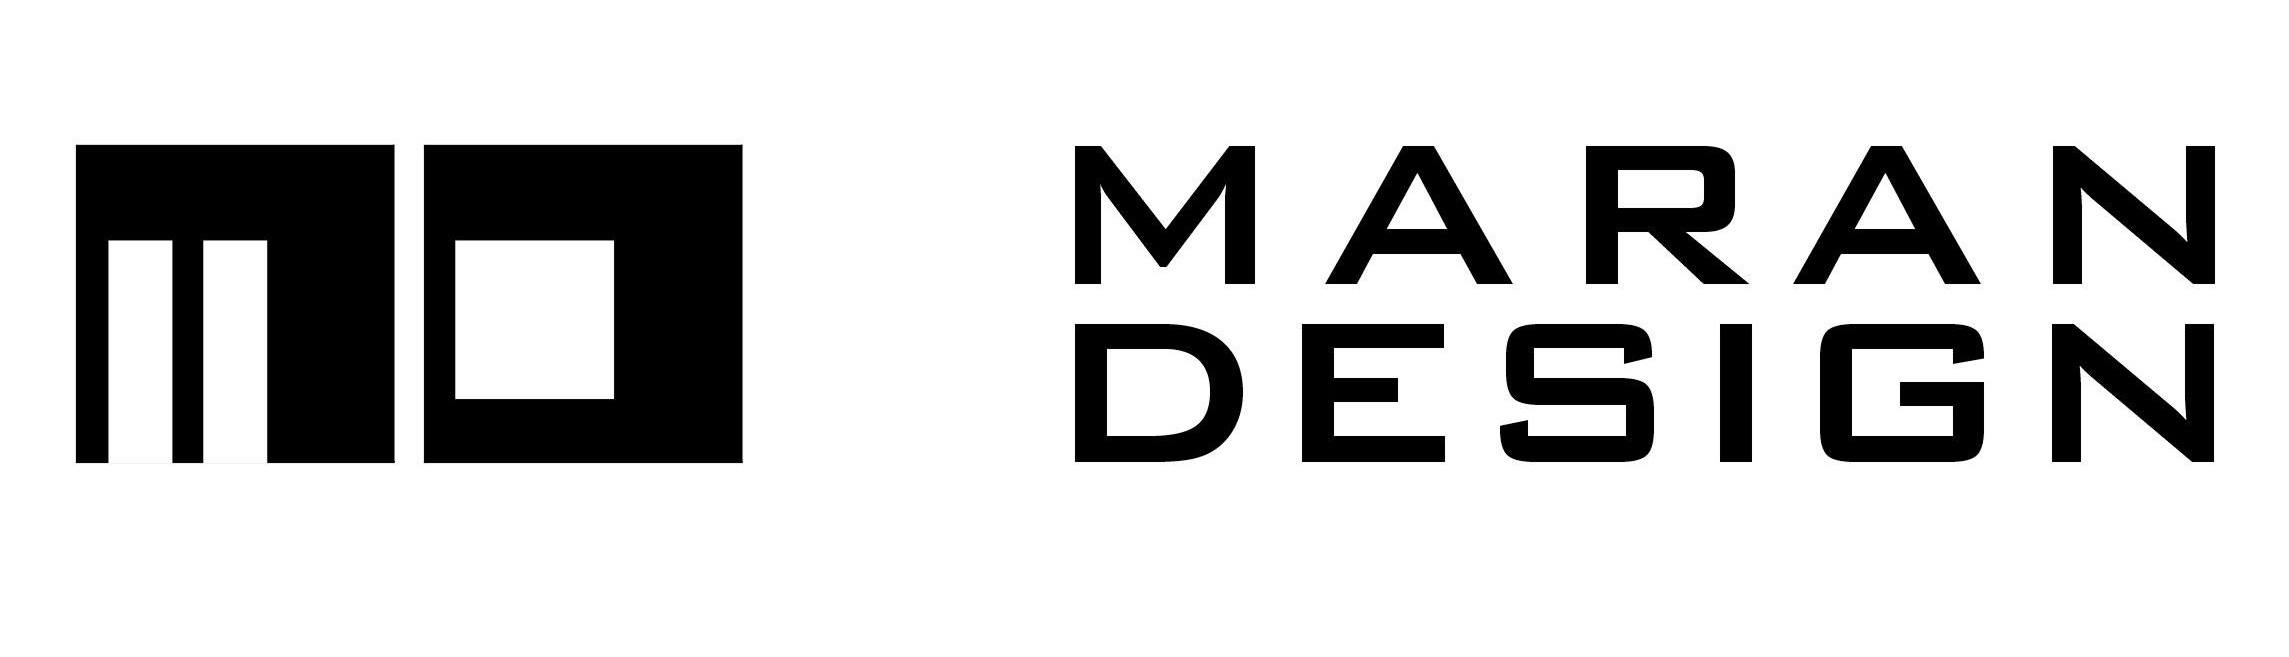 Maran Design|Legal Services|Professional Services